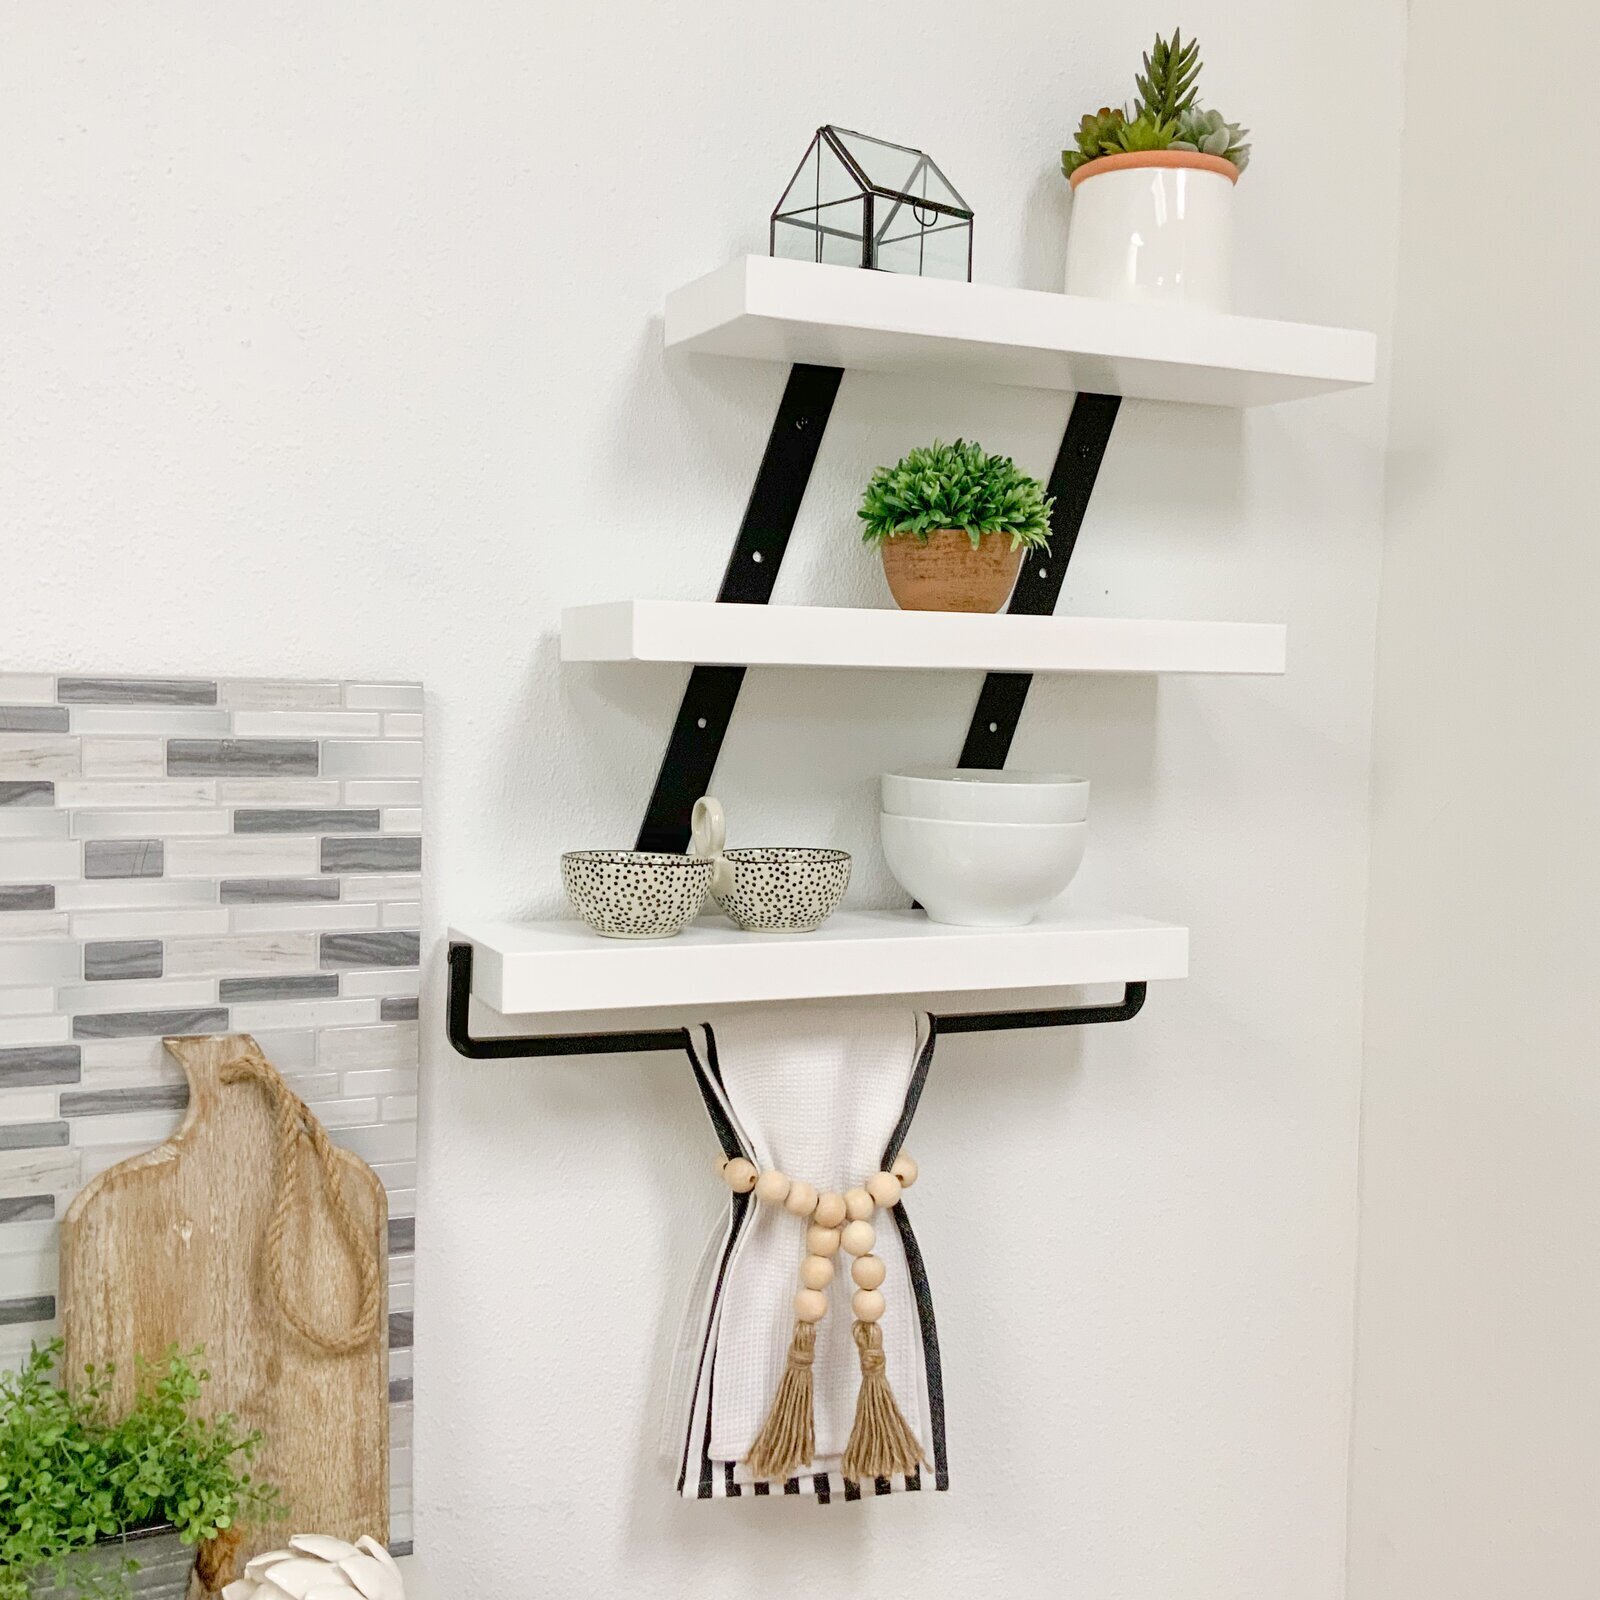 Diagonal spine wall shelf